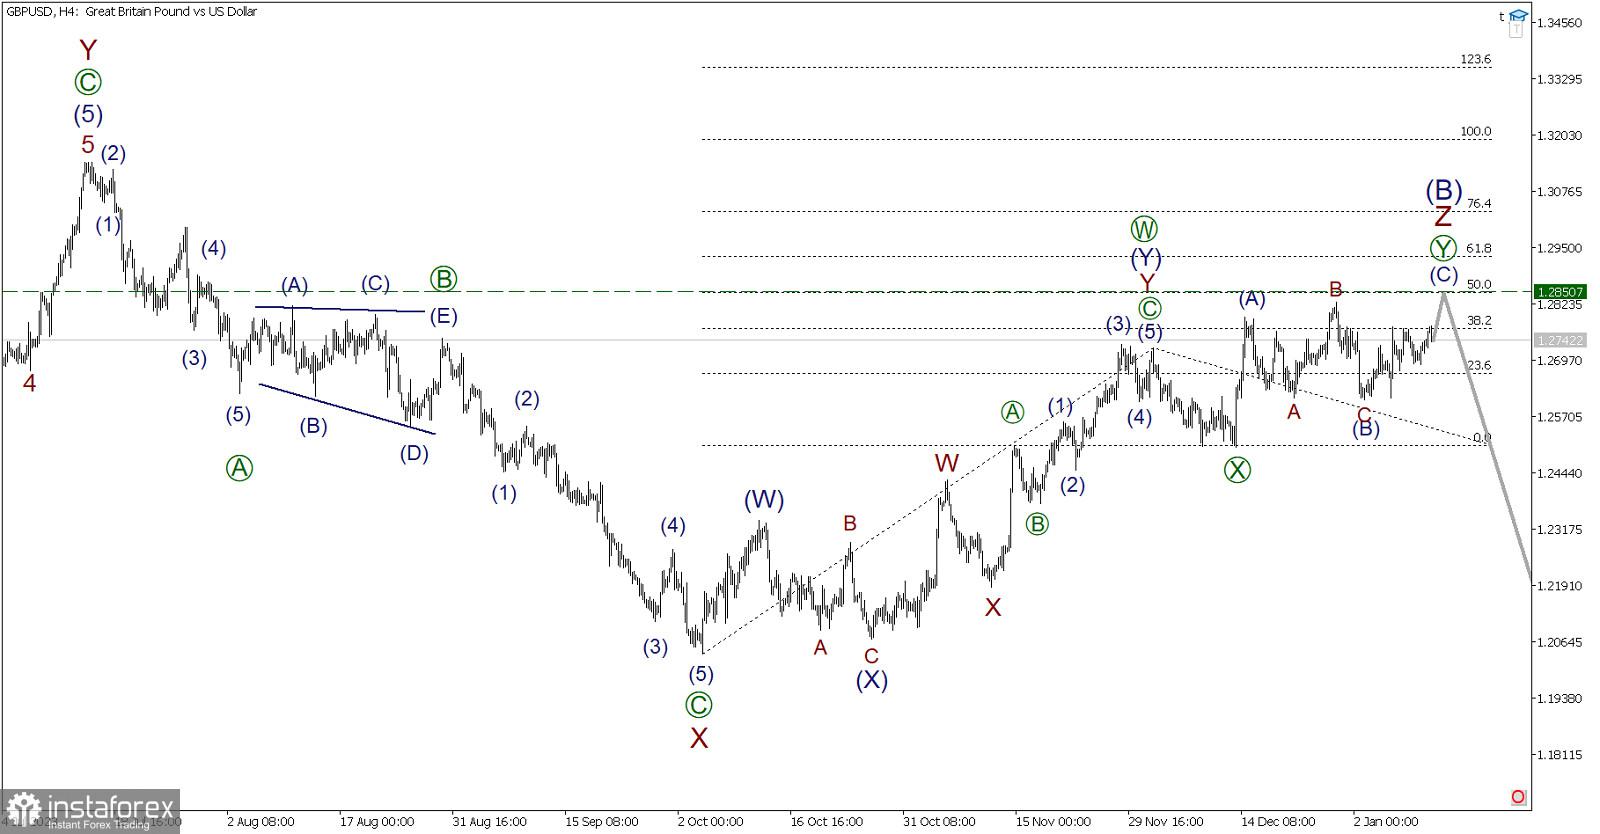 Analisis gelombang GBP/USD pada 11 Januari: Zigzag bullish mungkin menyelesaikan diagonal terakhir